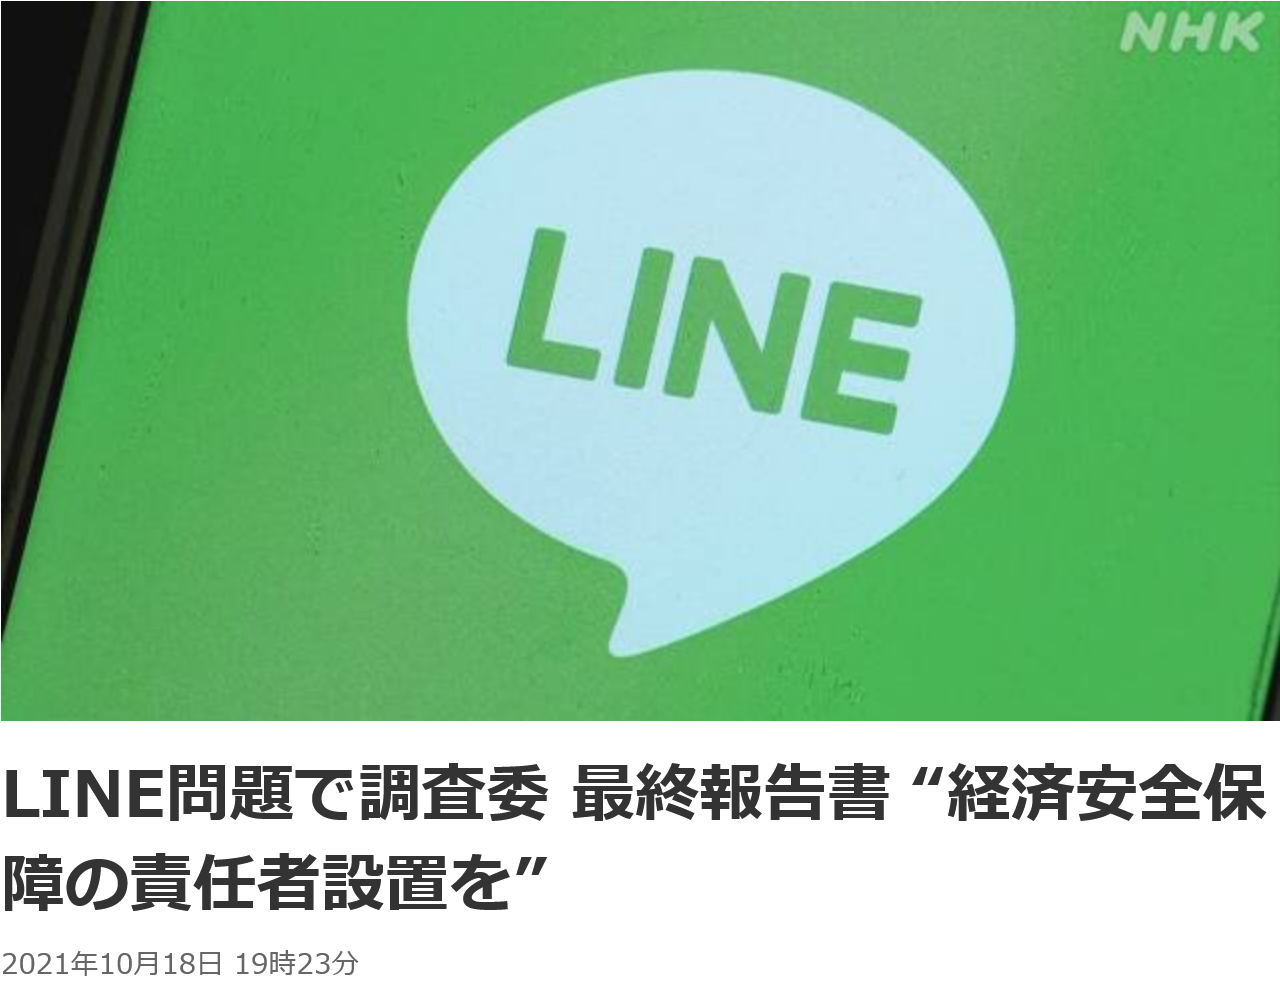 LINE問題で調査委 最終報告書 “経済安全保障の責任者設置を” NHKニュース